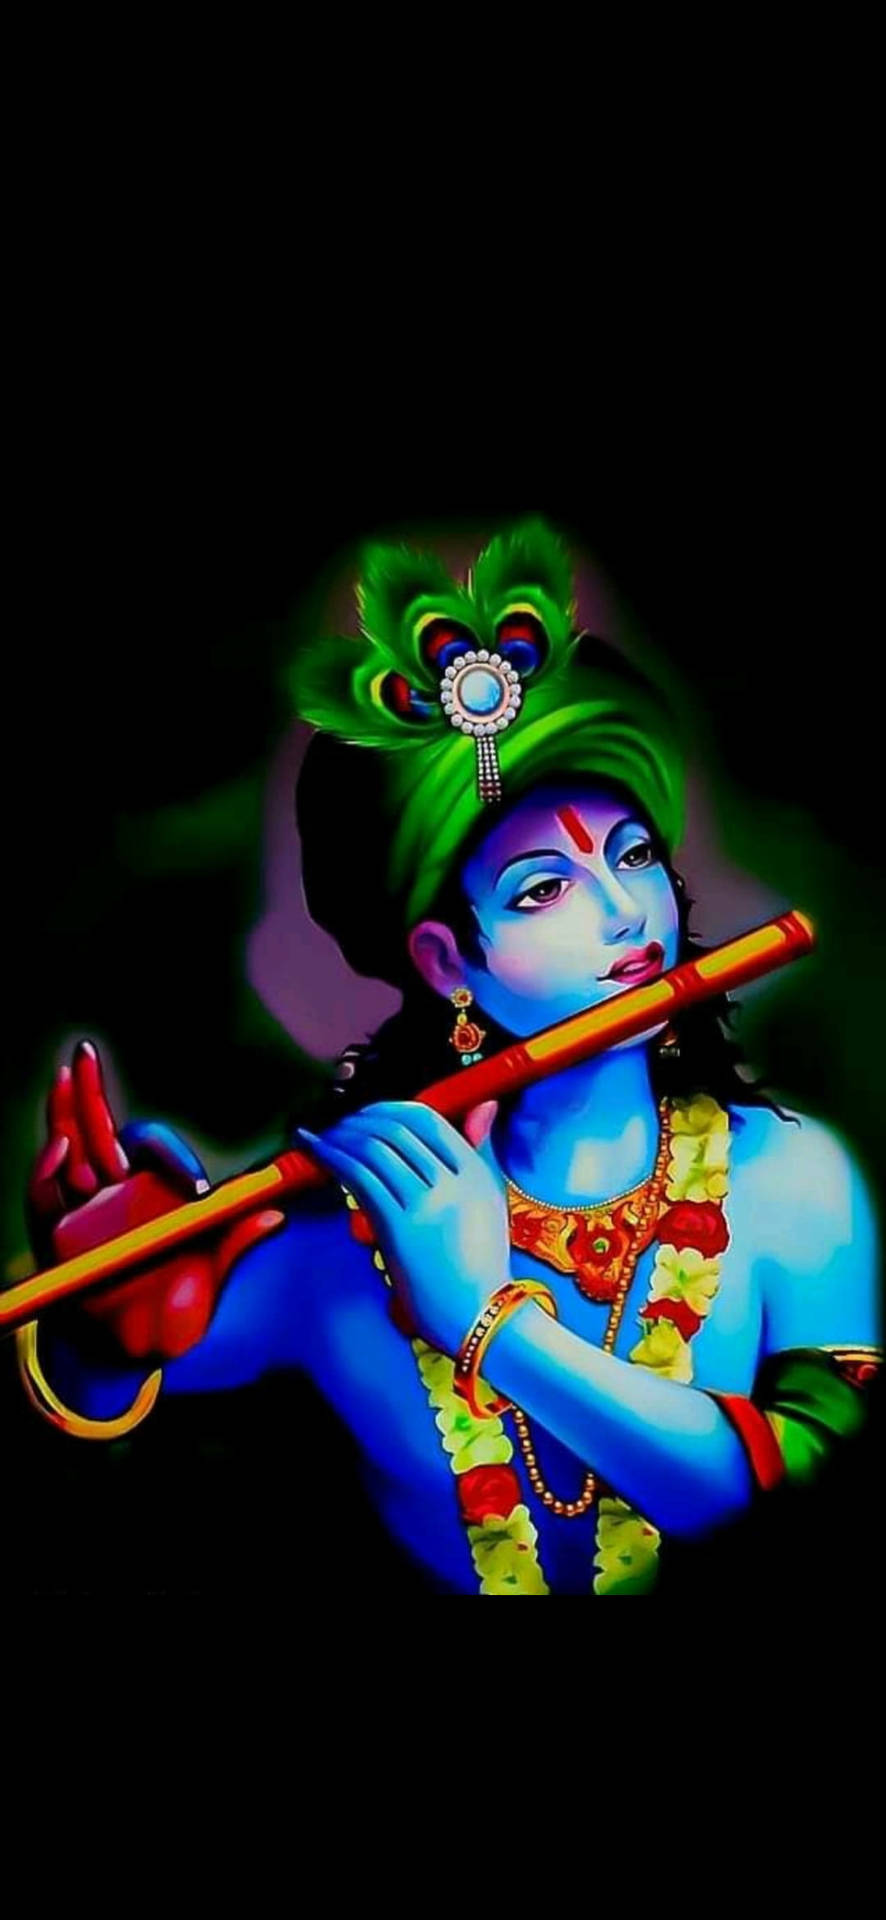 Blue Krishna Playing Flute Hd